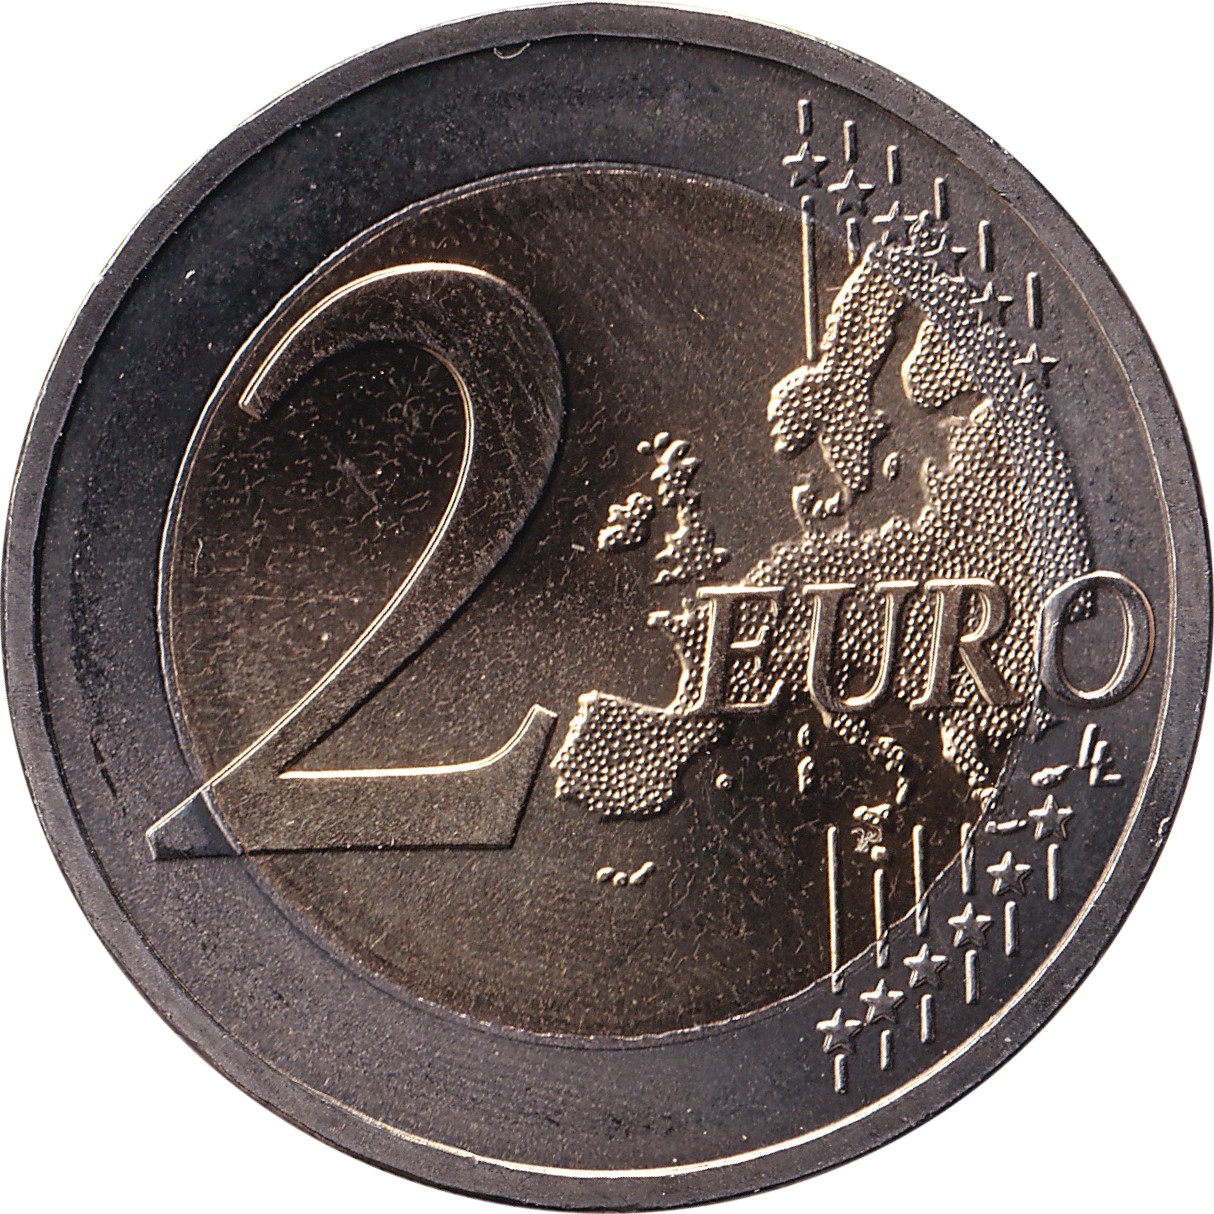 2 euro - German Reunification - 25 years